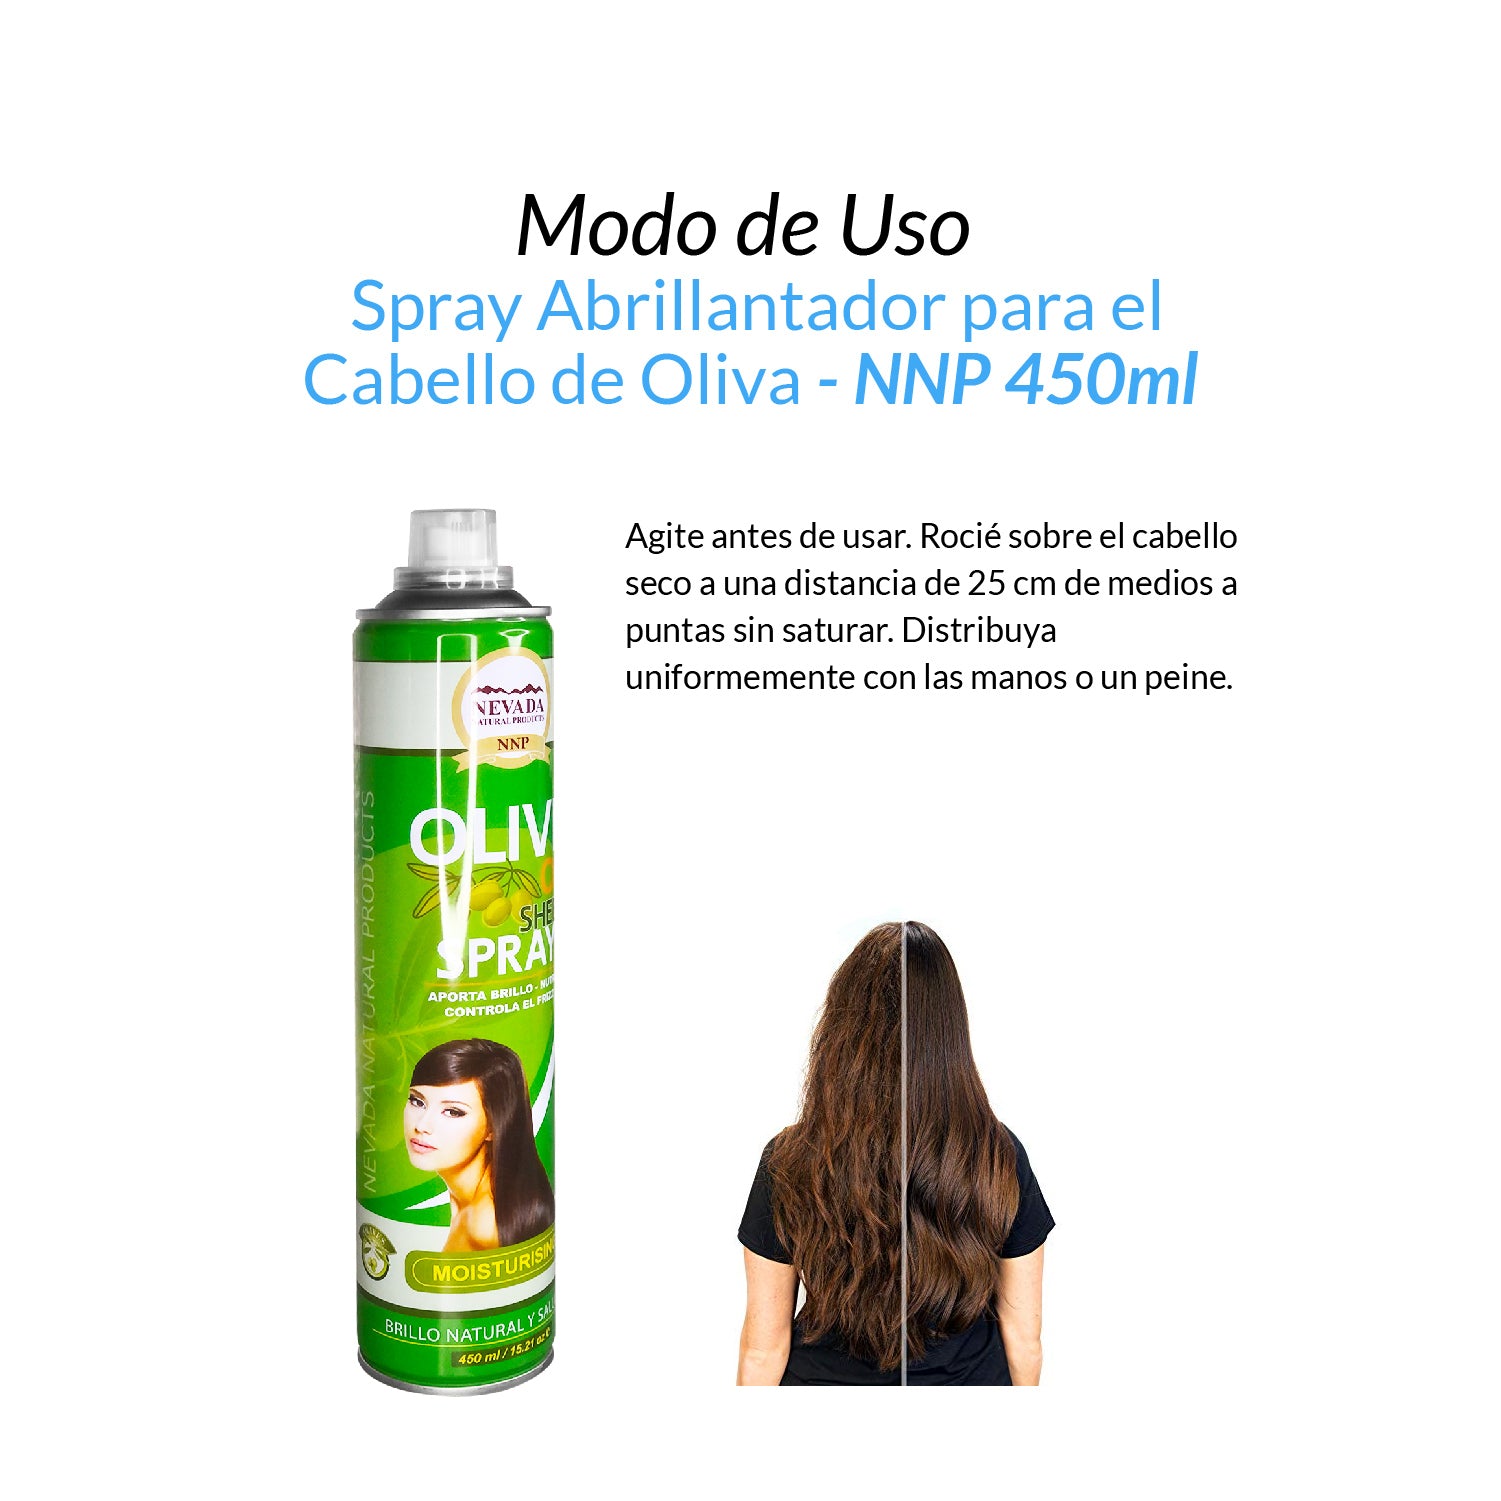 Spray Abrillantador para el Cabello de Oliva - NNP 450ml